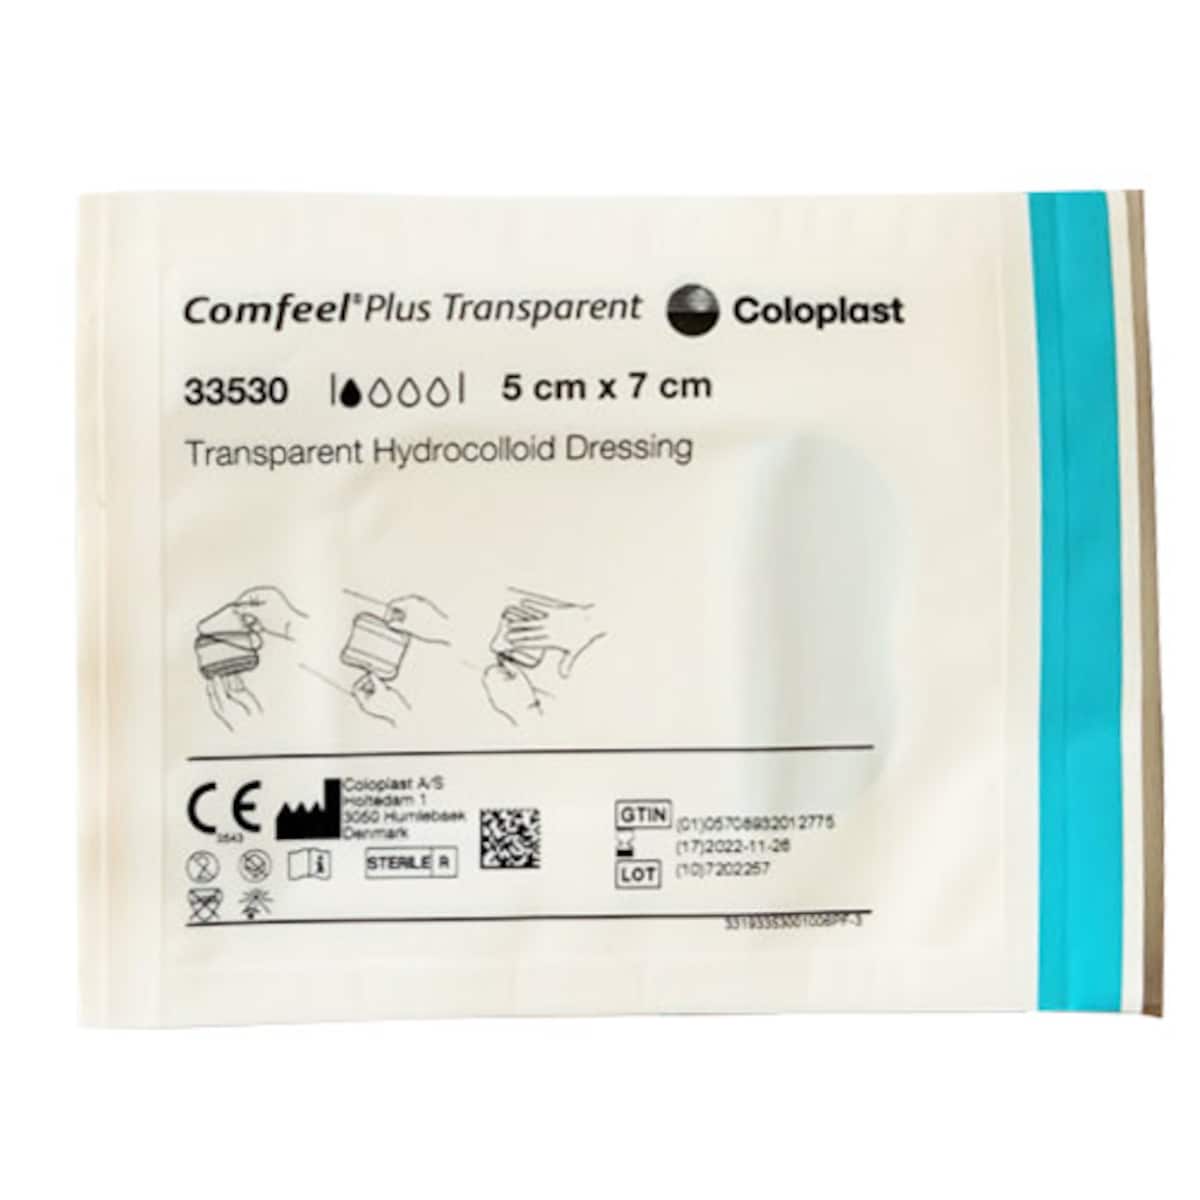 Comfeel Plus Transparent Hydrocolloid Dressing 5cm x 7cm Single